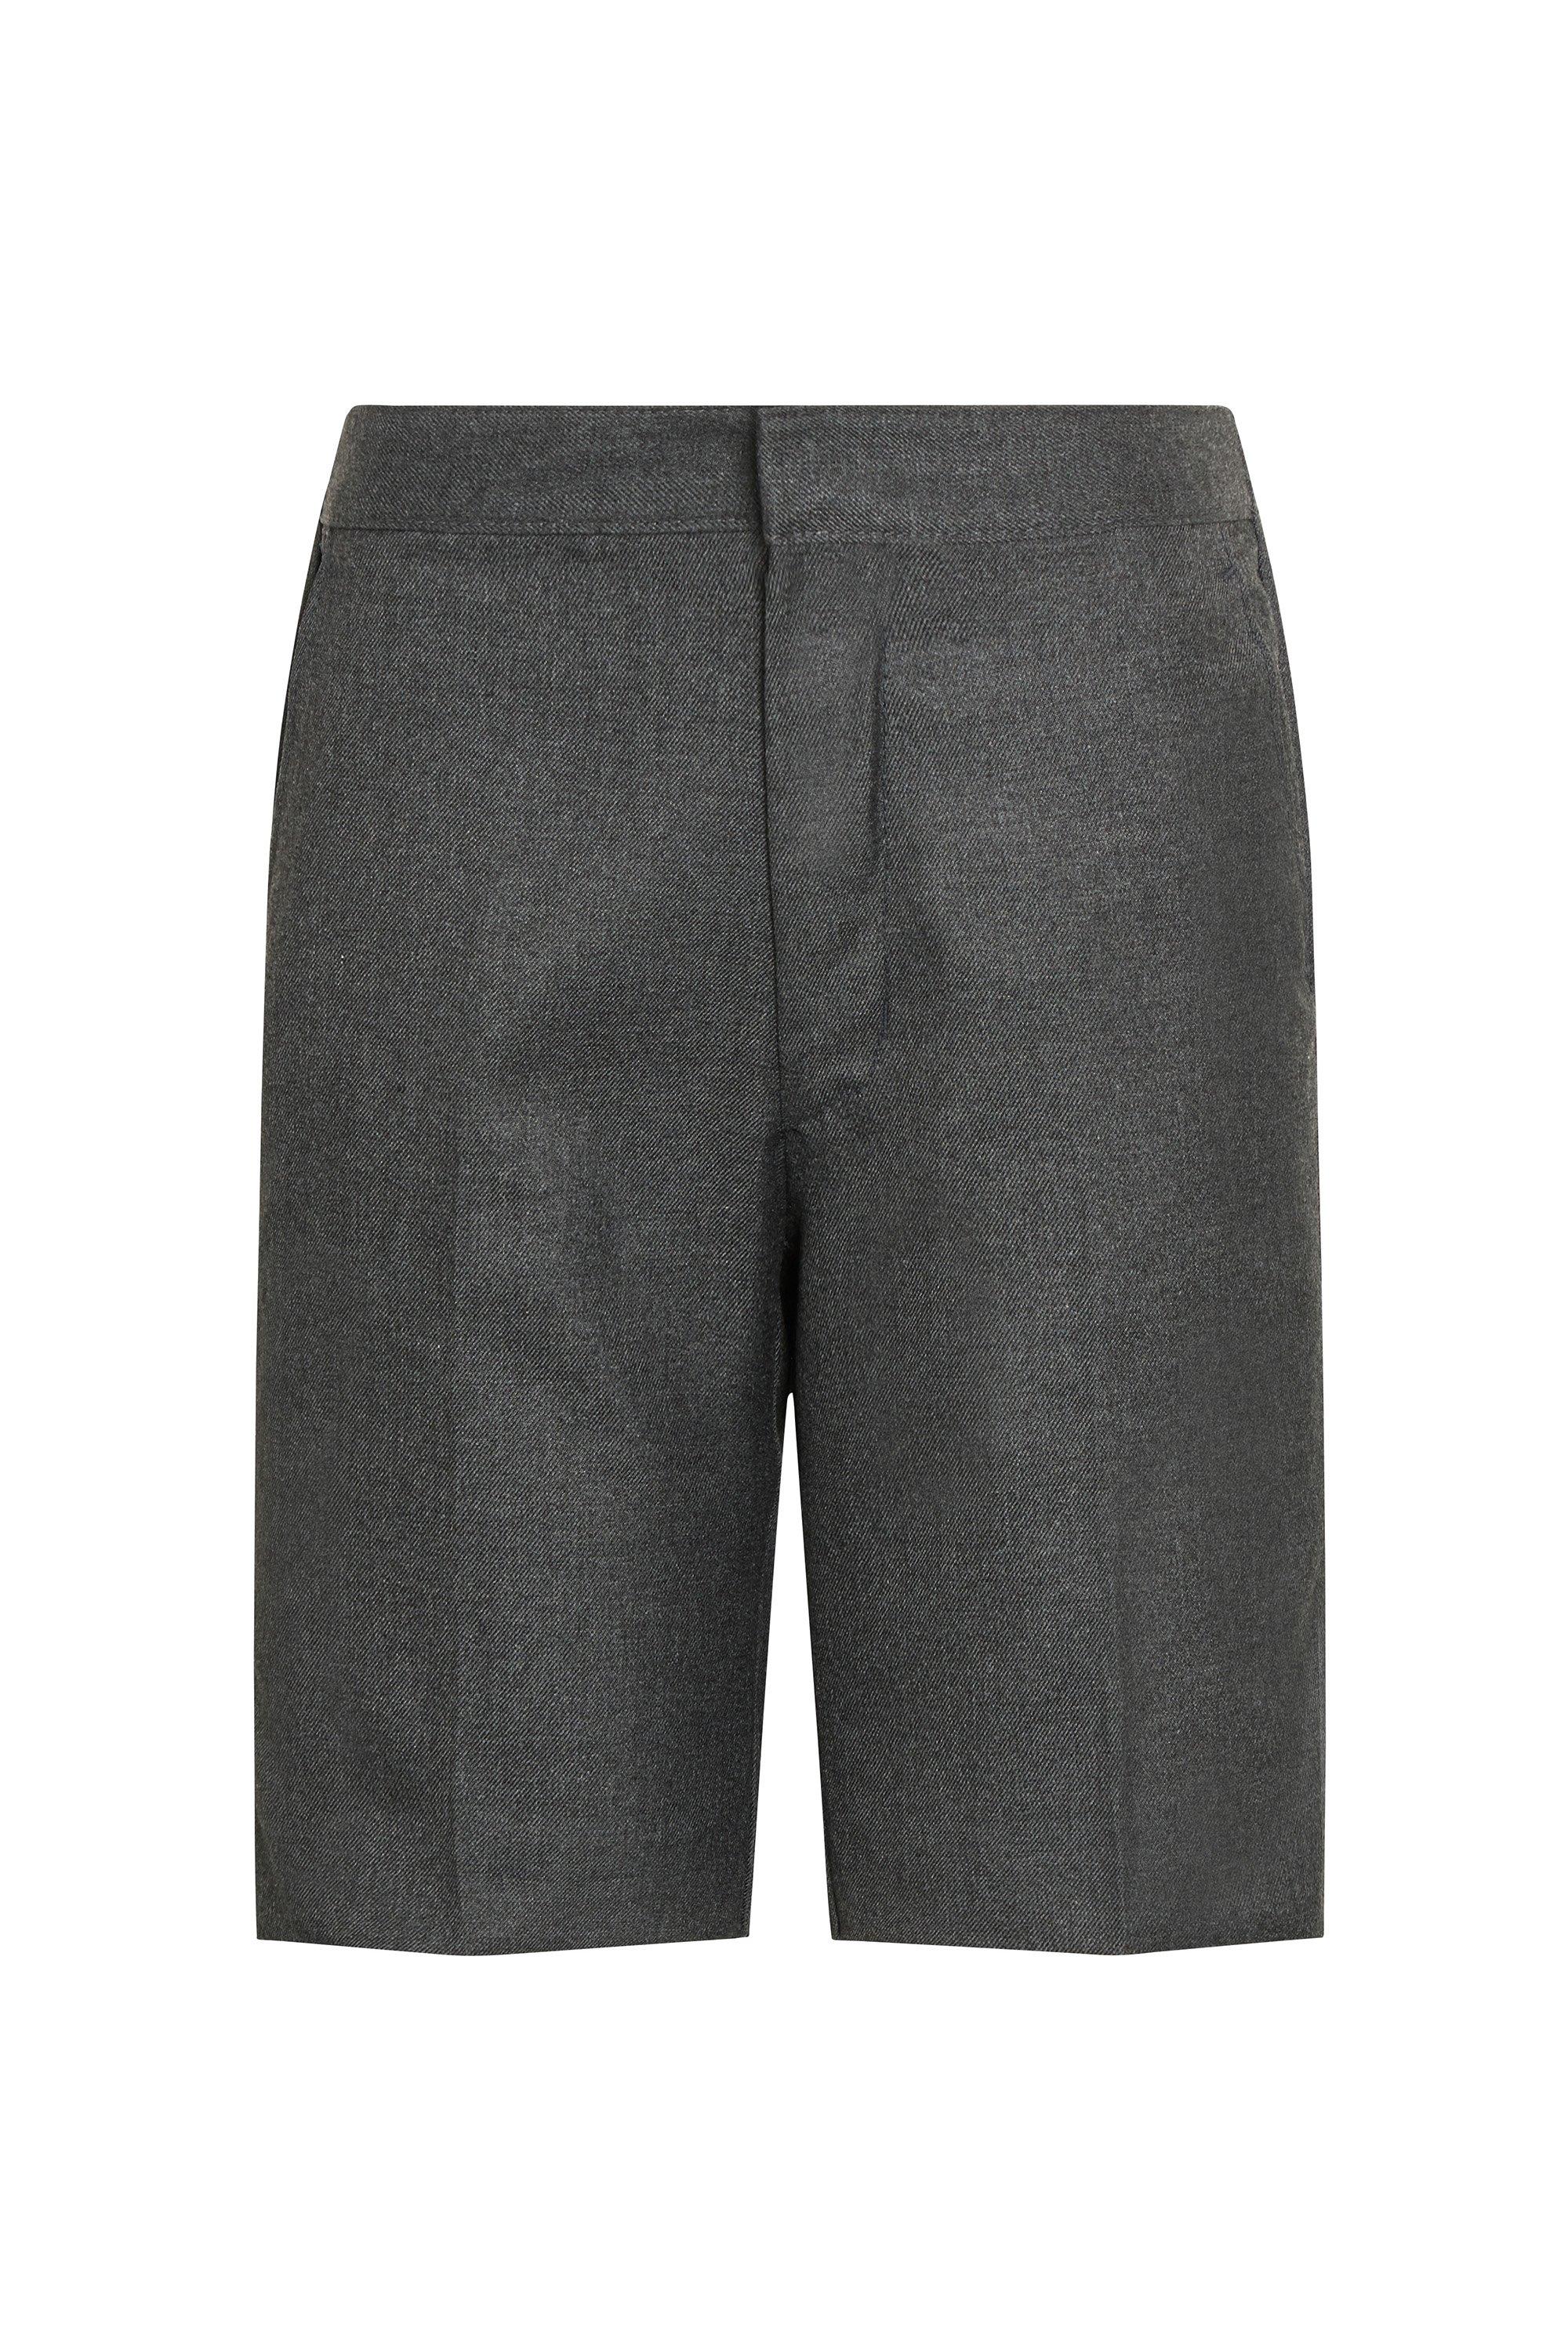 Bermuda Length School Shorts